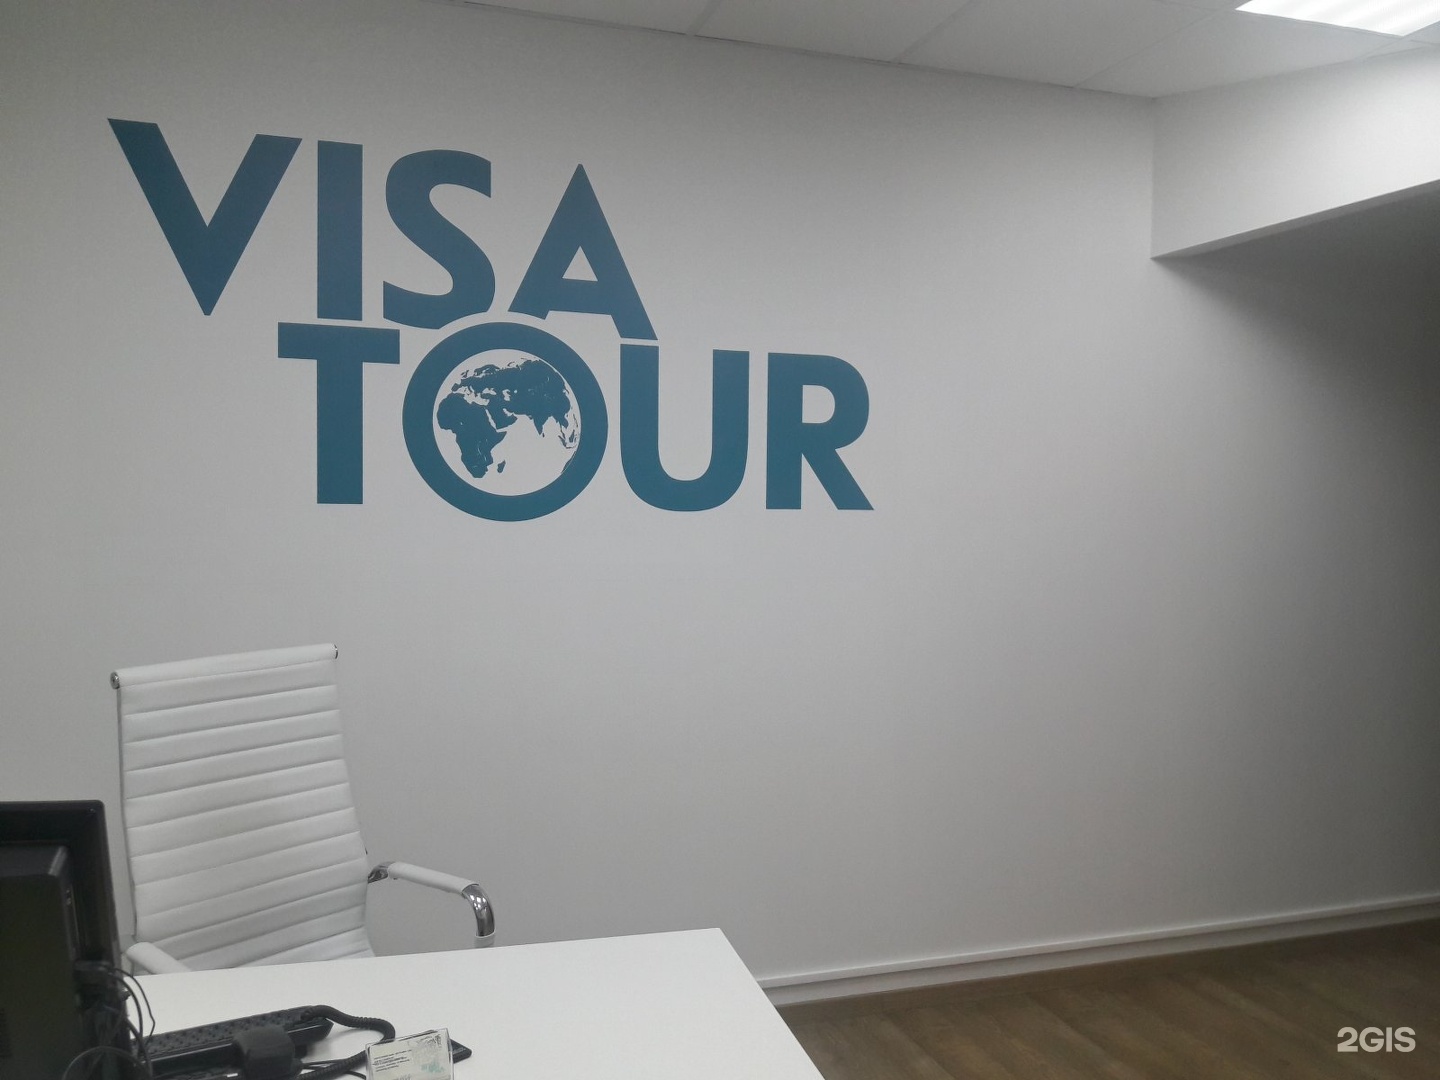 Visa центр. Visa Travel.